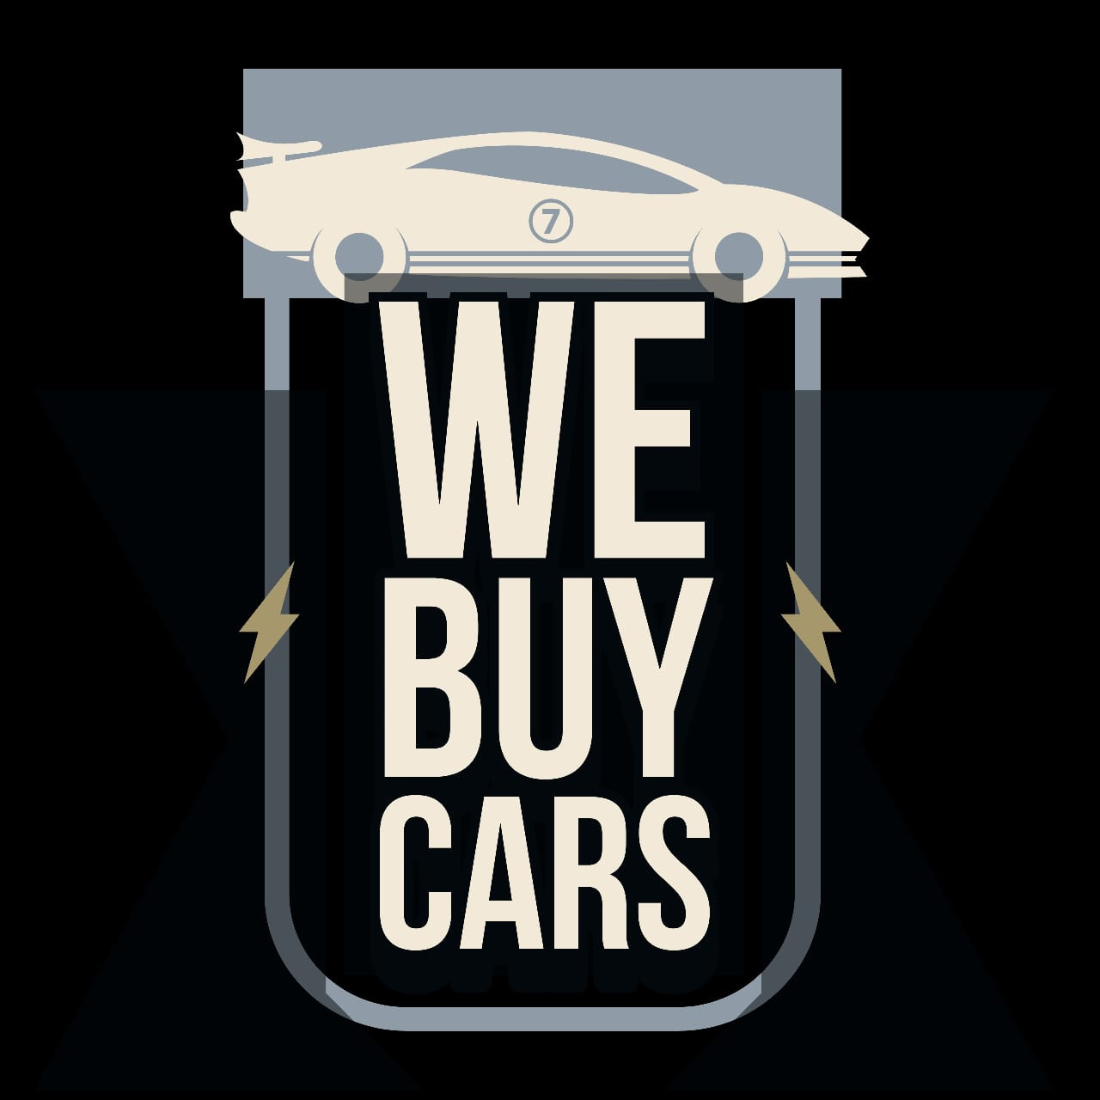 We Buy Cars Business Logos facebook image.